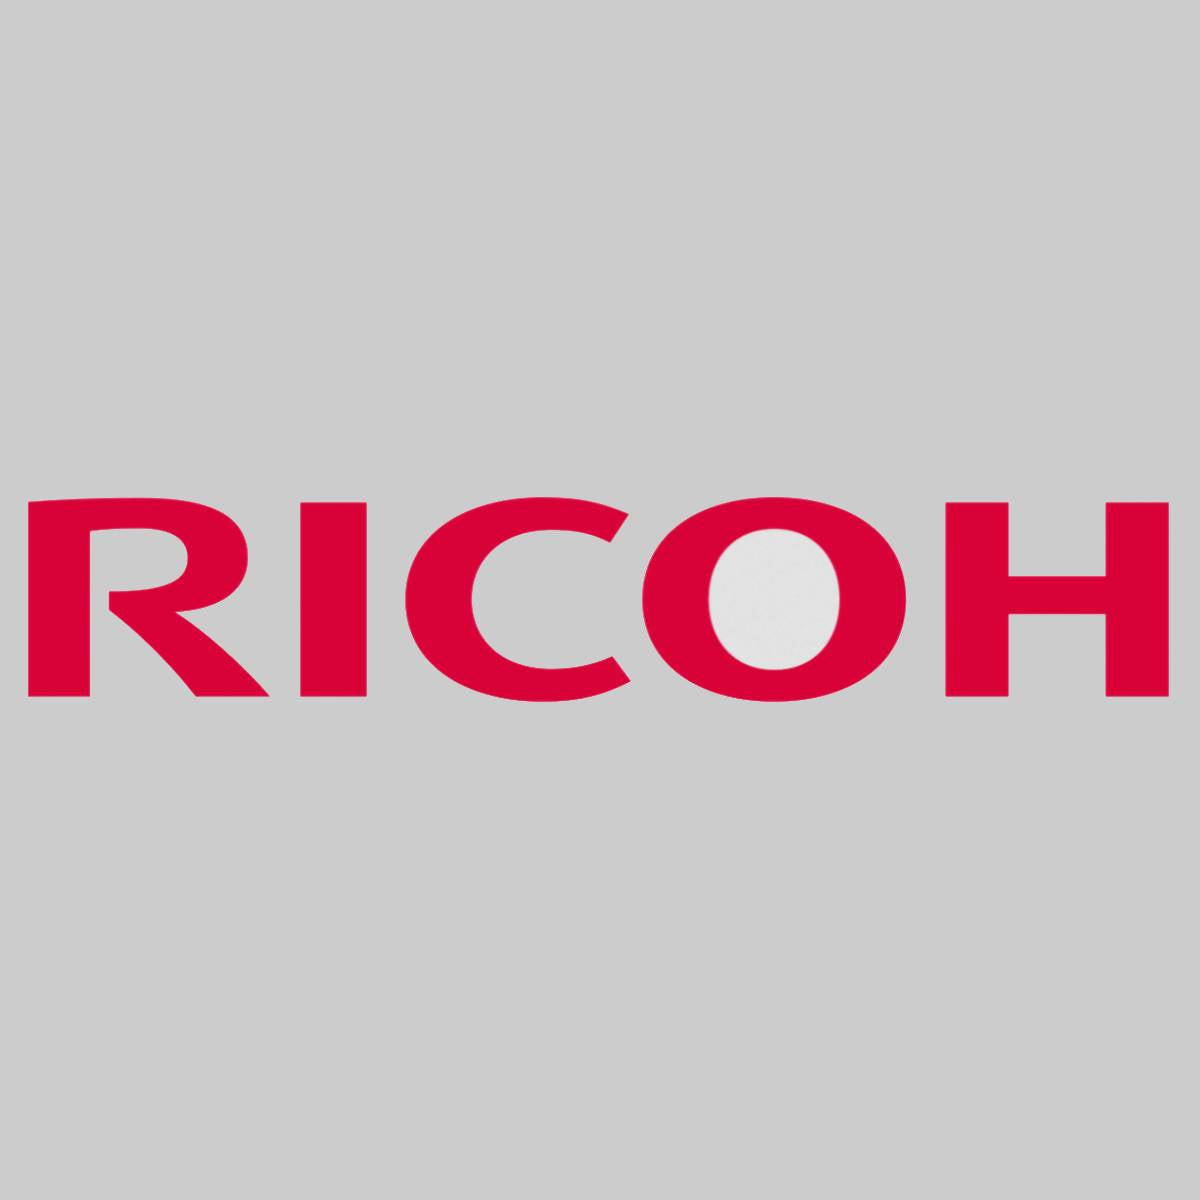 "Original Ricoh Transfer Roller D1796250 for Ricoh Pro 8100 8110 8120 NEW OVP